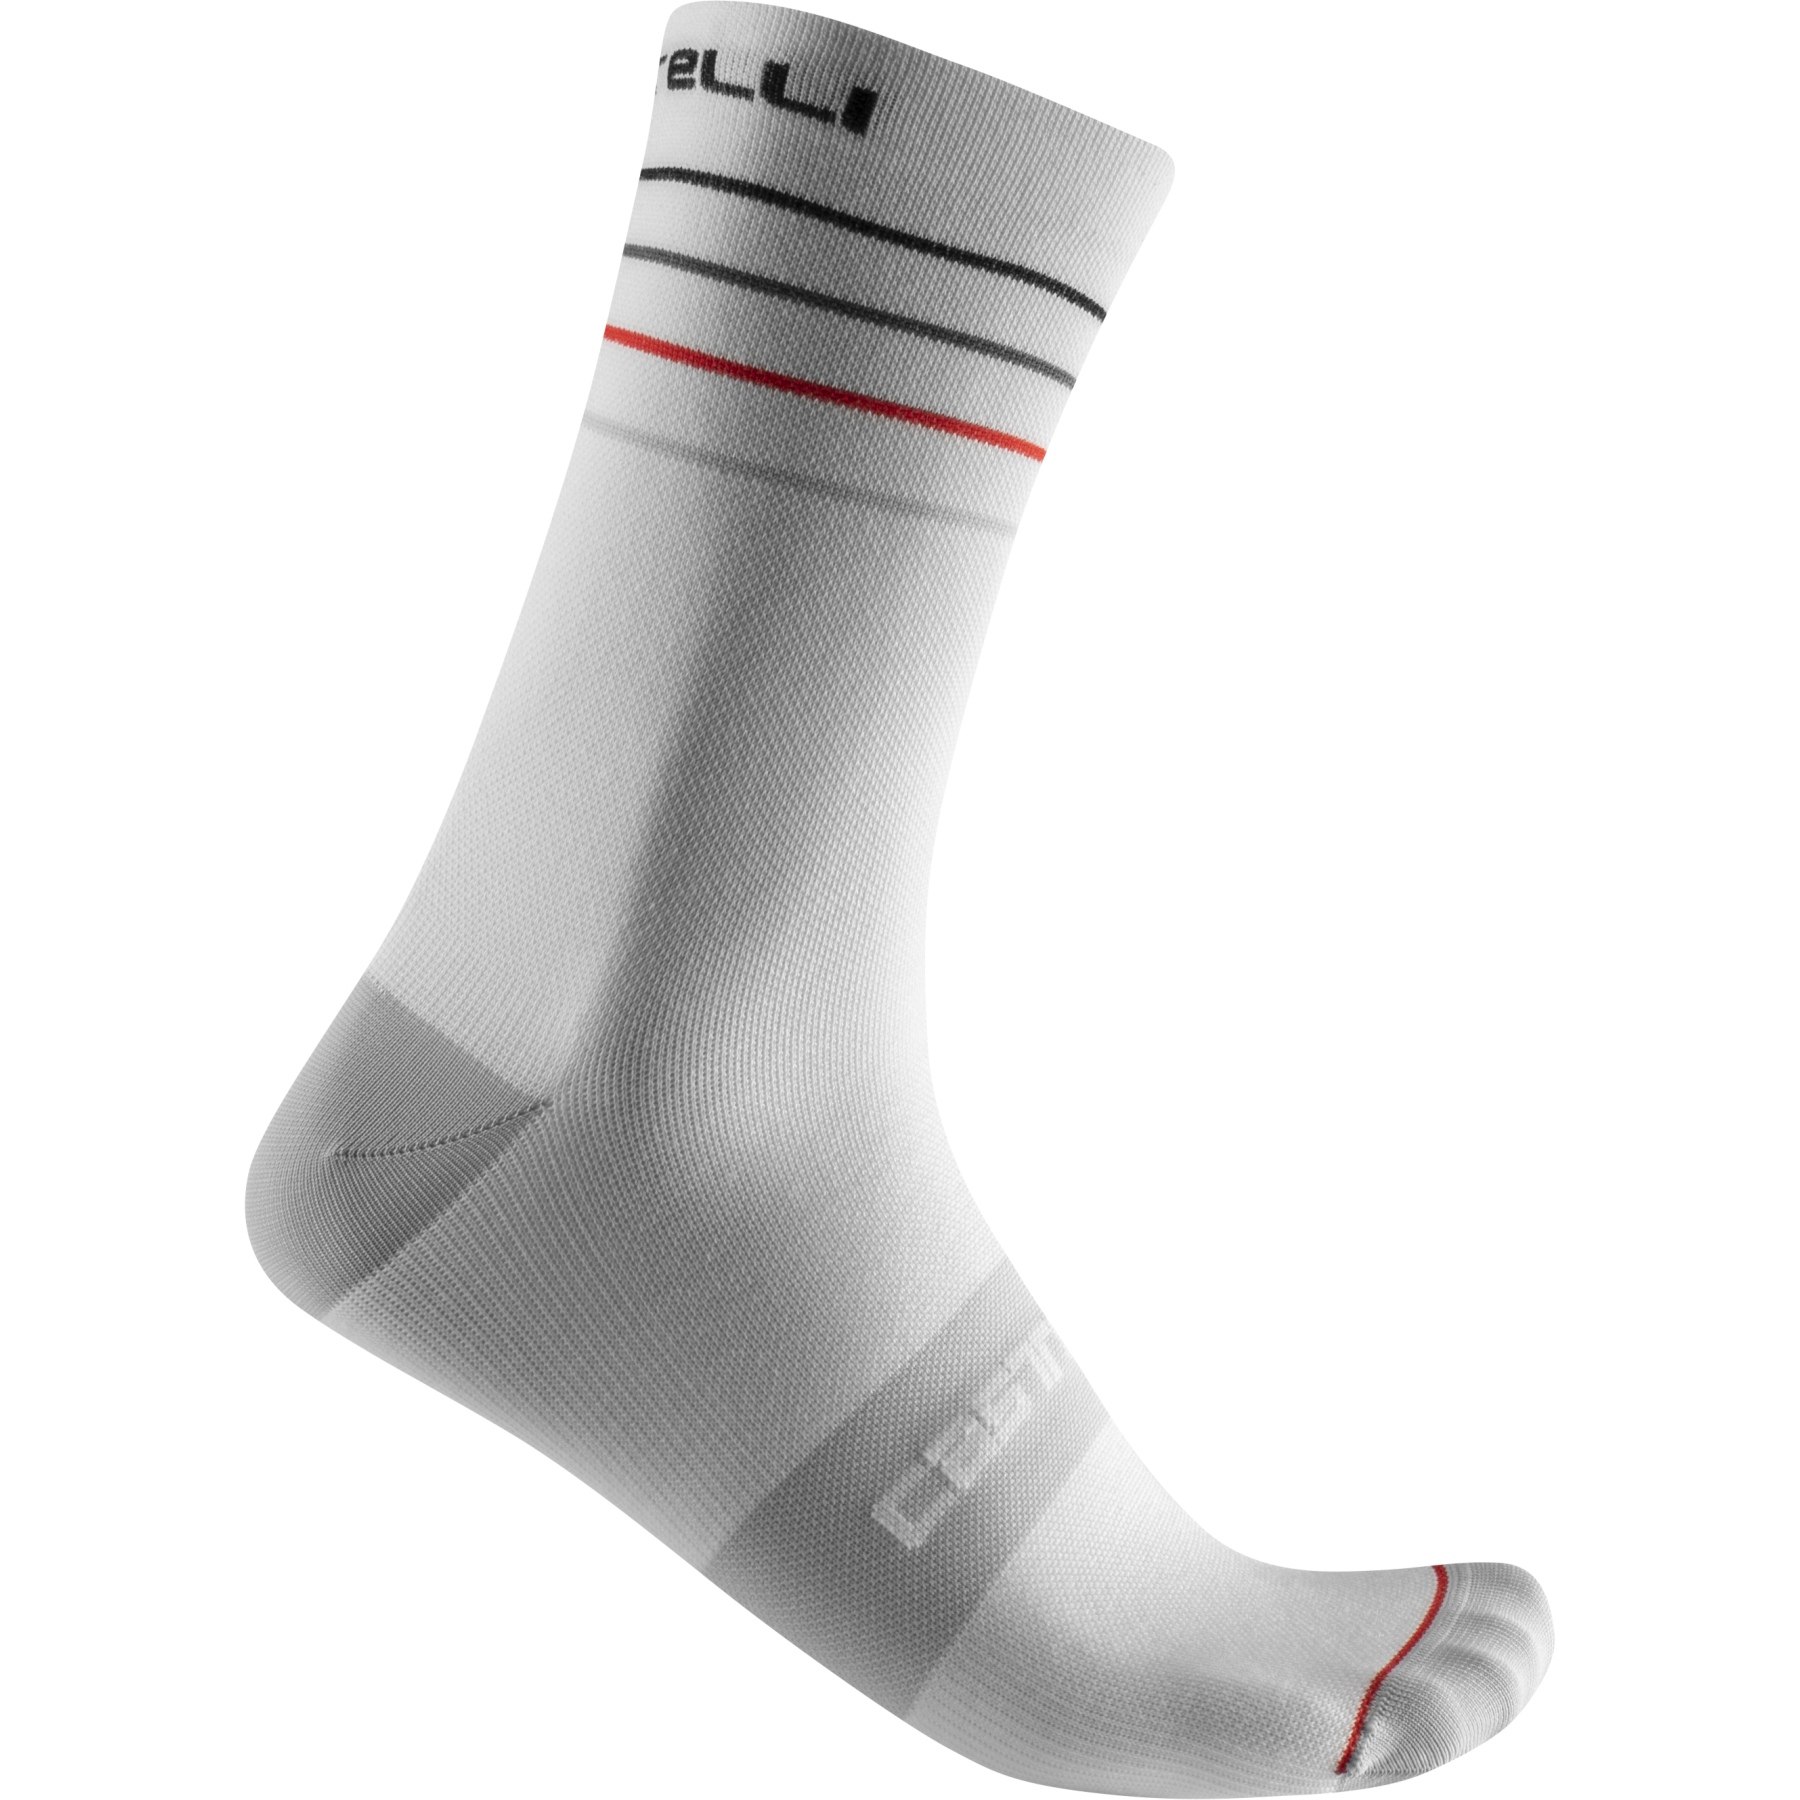 Productfoto van Castelli Endurance 15 Socks - white/black-red 001